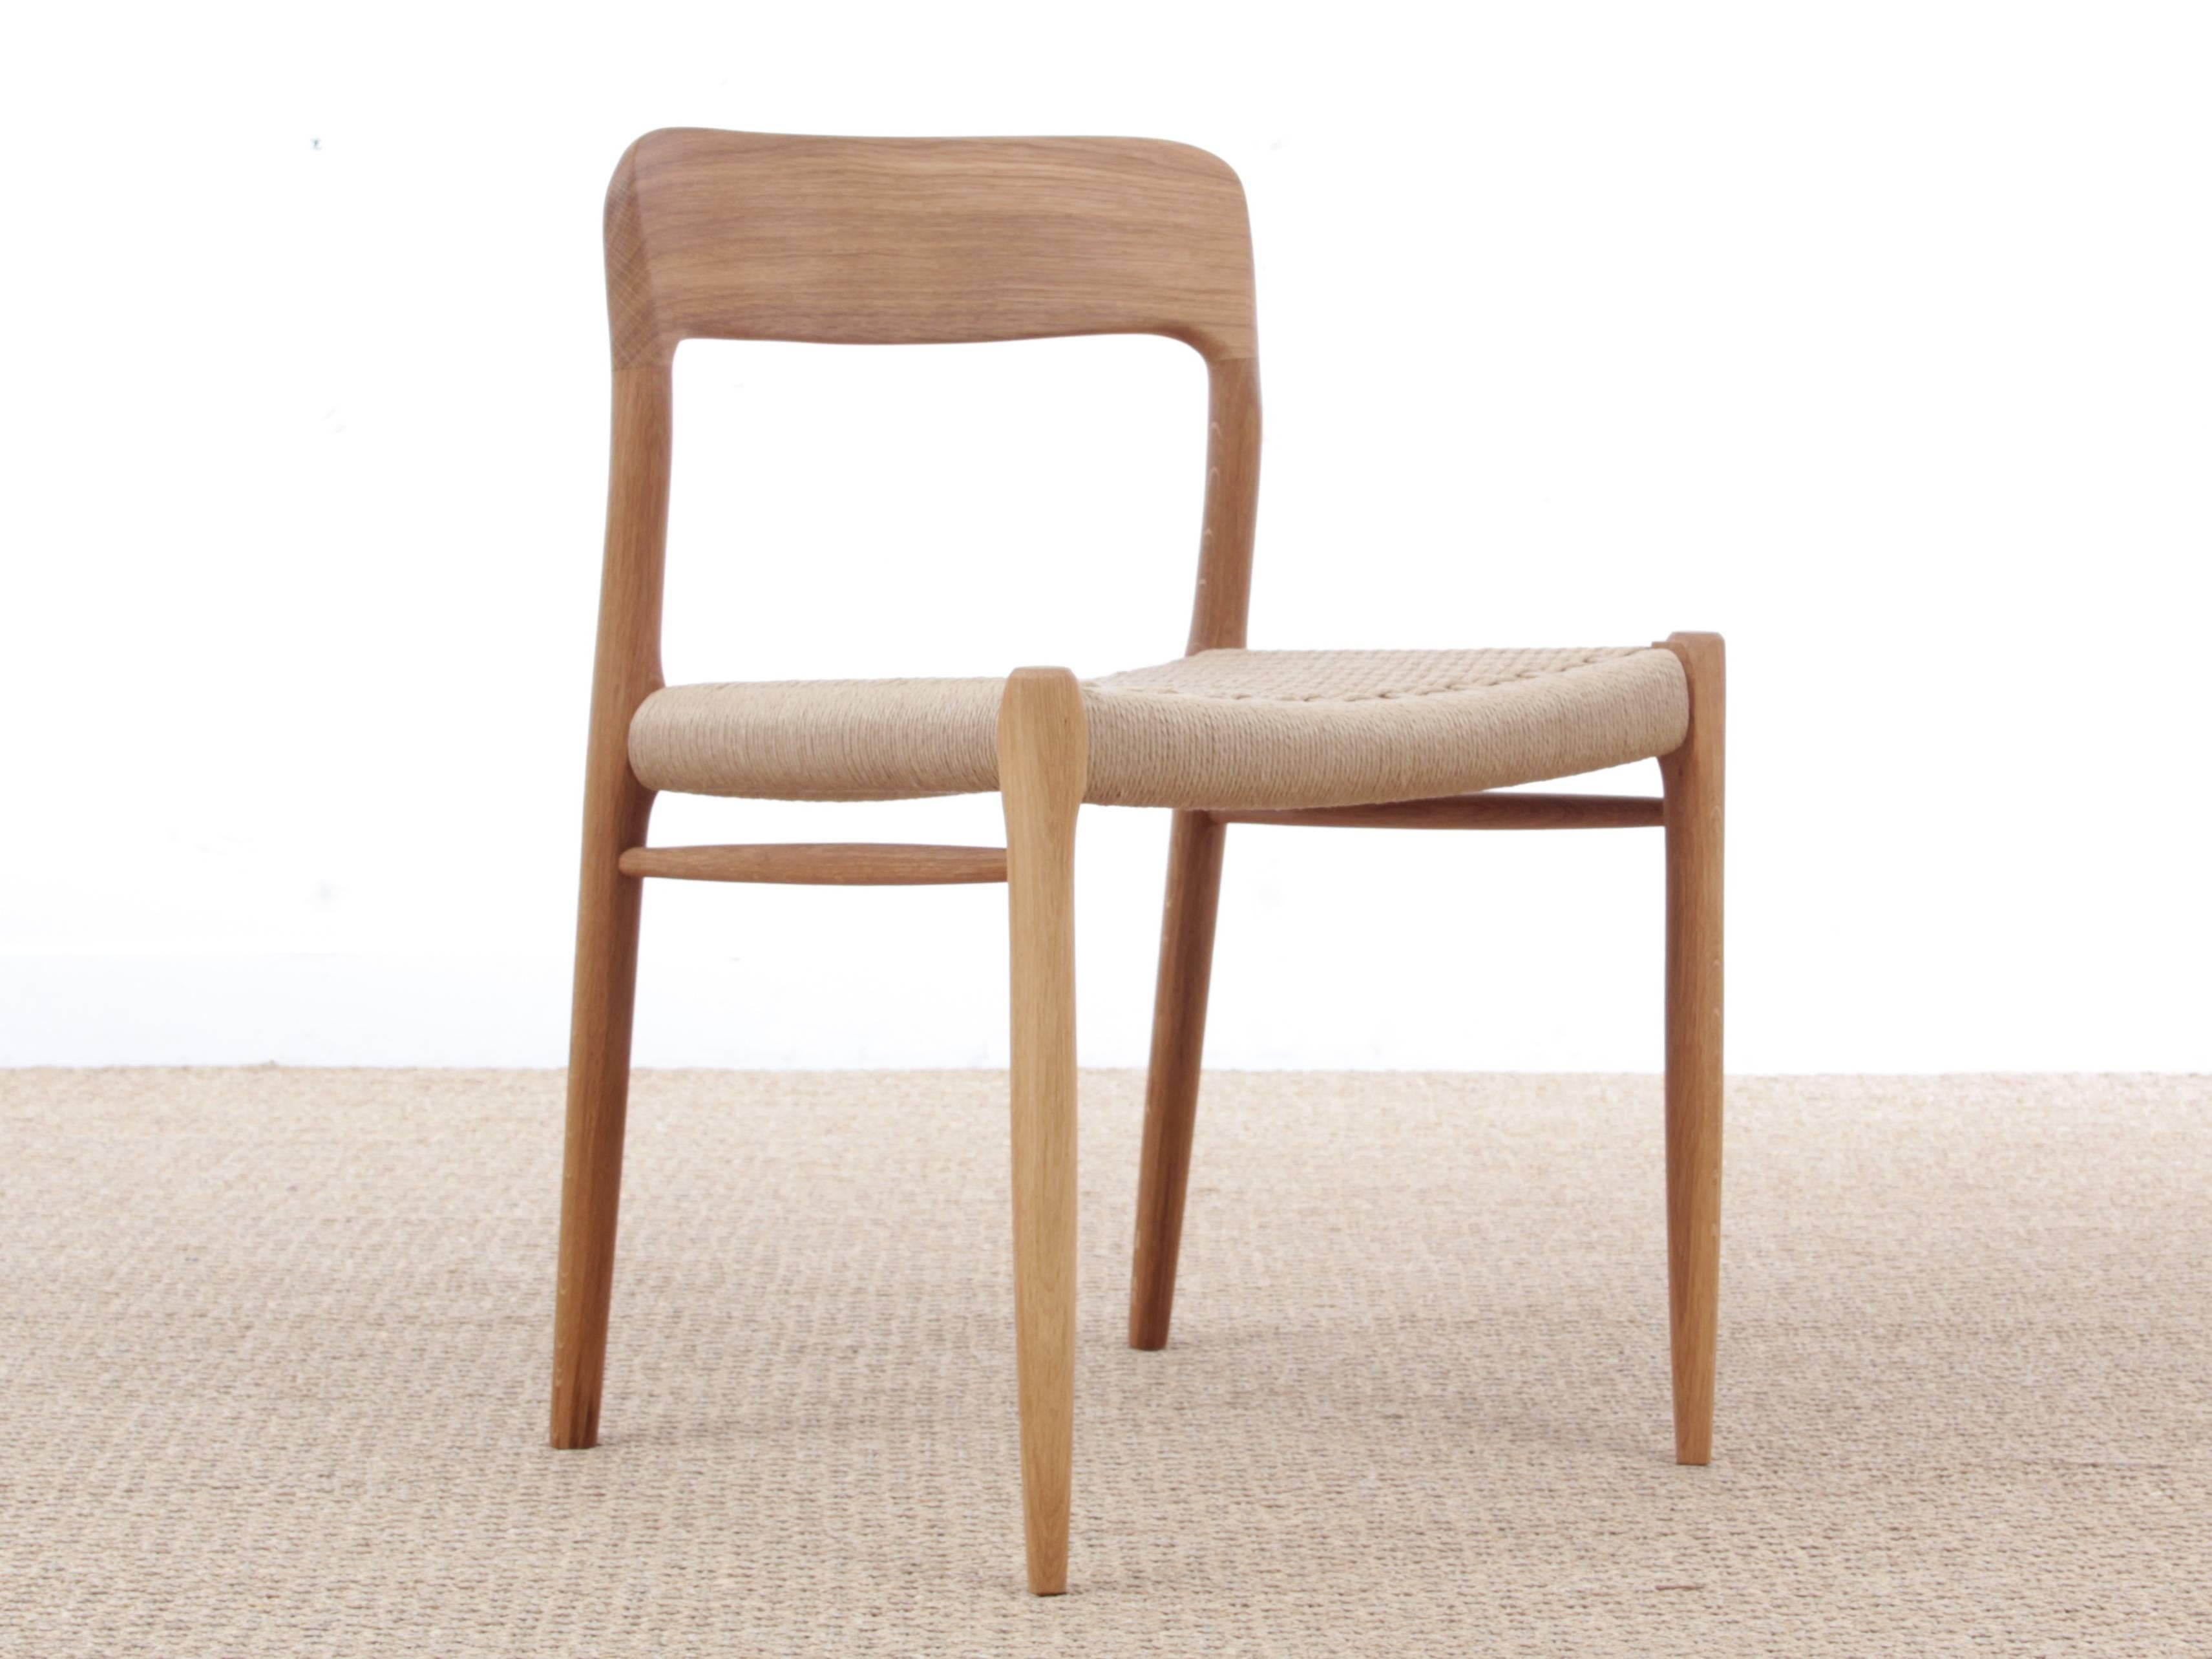 Mid-Century Modern Danish chair model 75 by Niels O. Møller. New production, still handmade in the historical Møllers workshop in Denmark.

Finish: oiled oak. Seat: natural or black papercord 